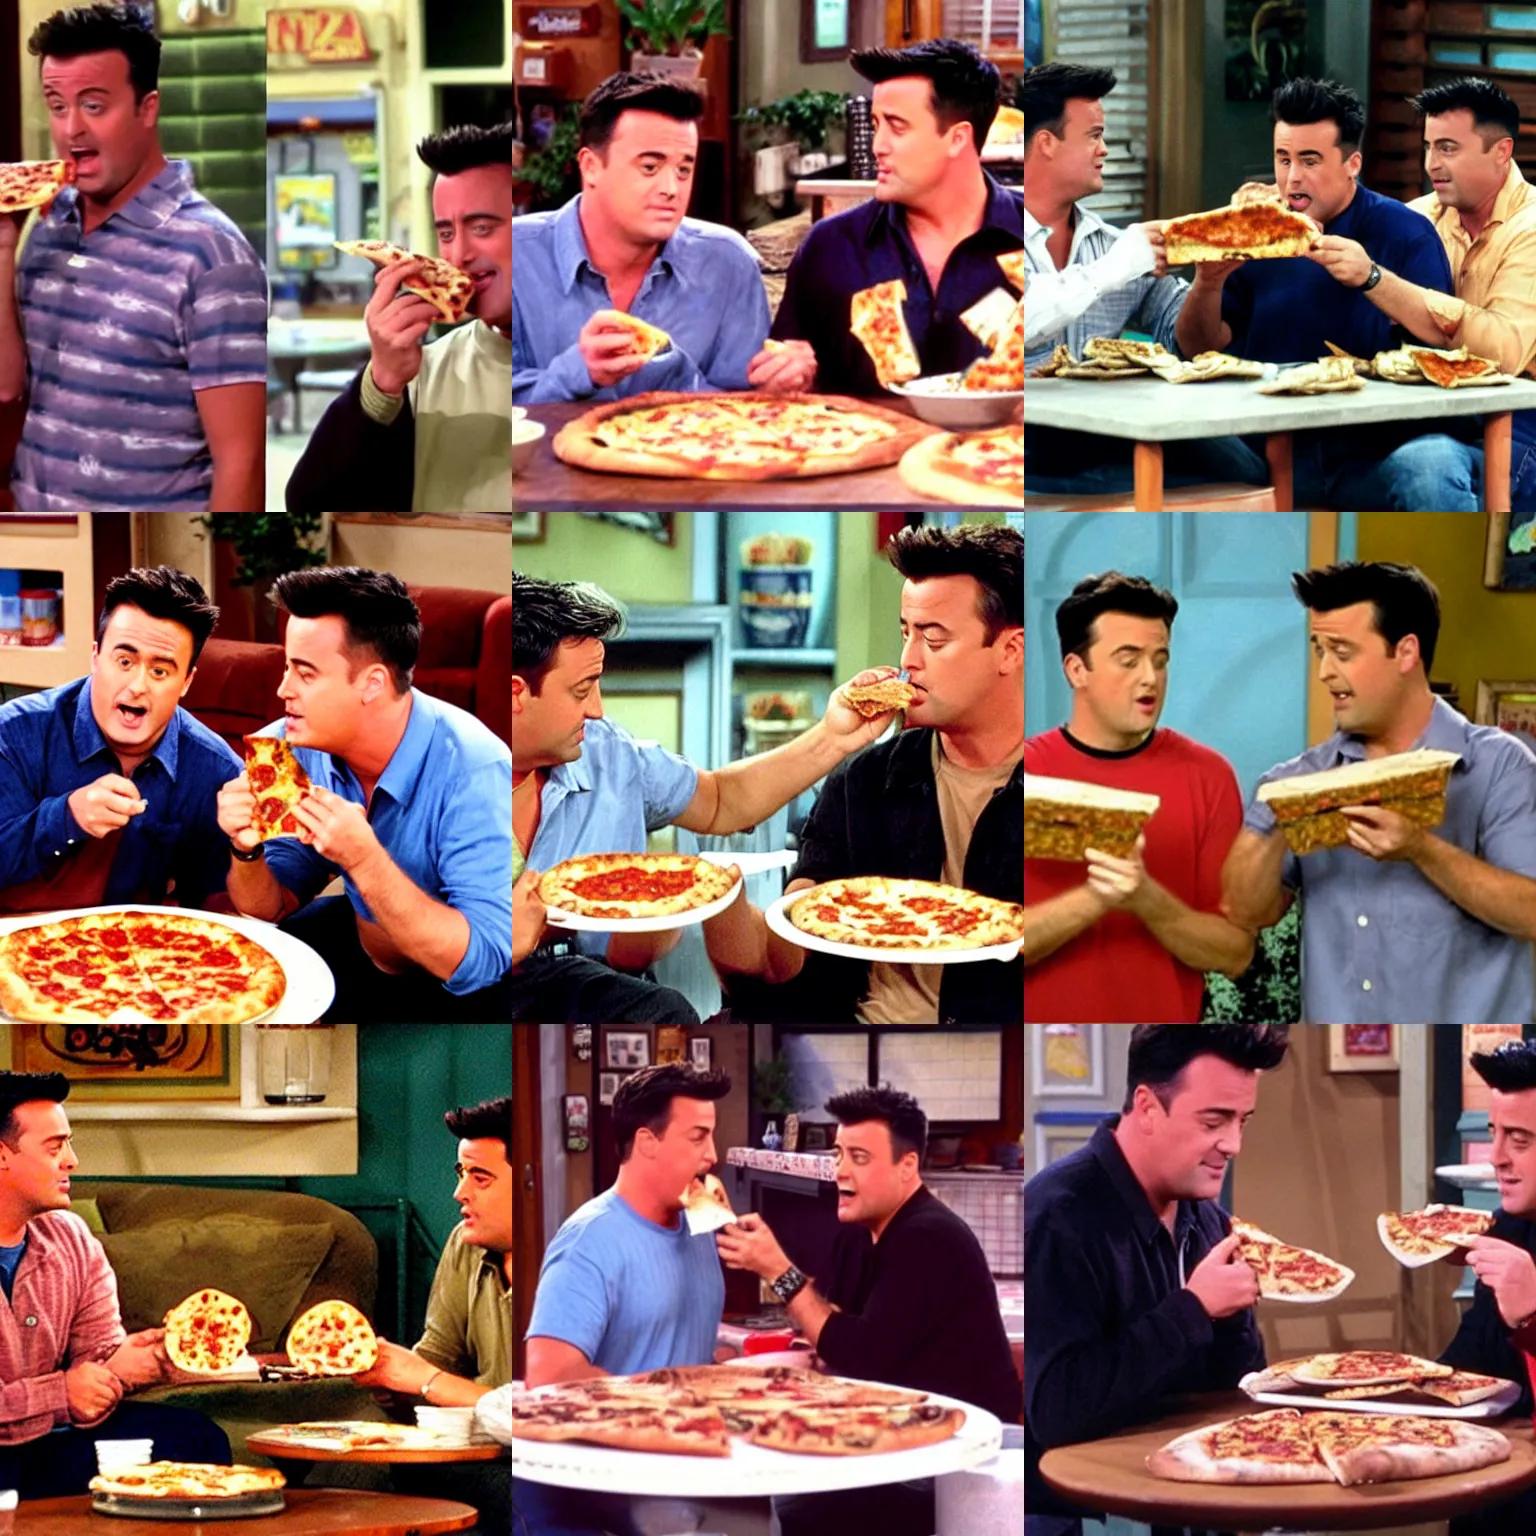 Prompt: chandler bing and joey Tribbiani eating pizza, friends sitcom screenshot